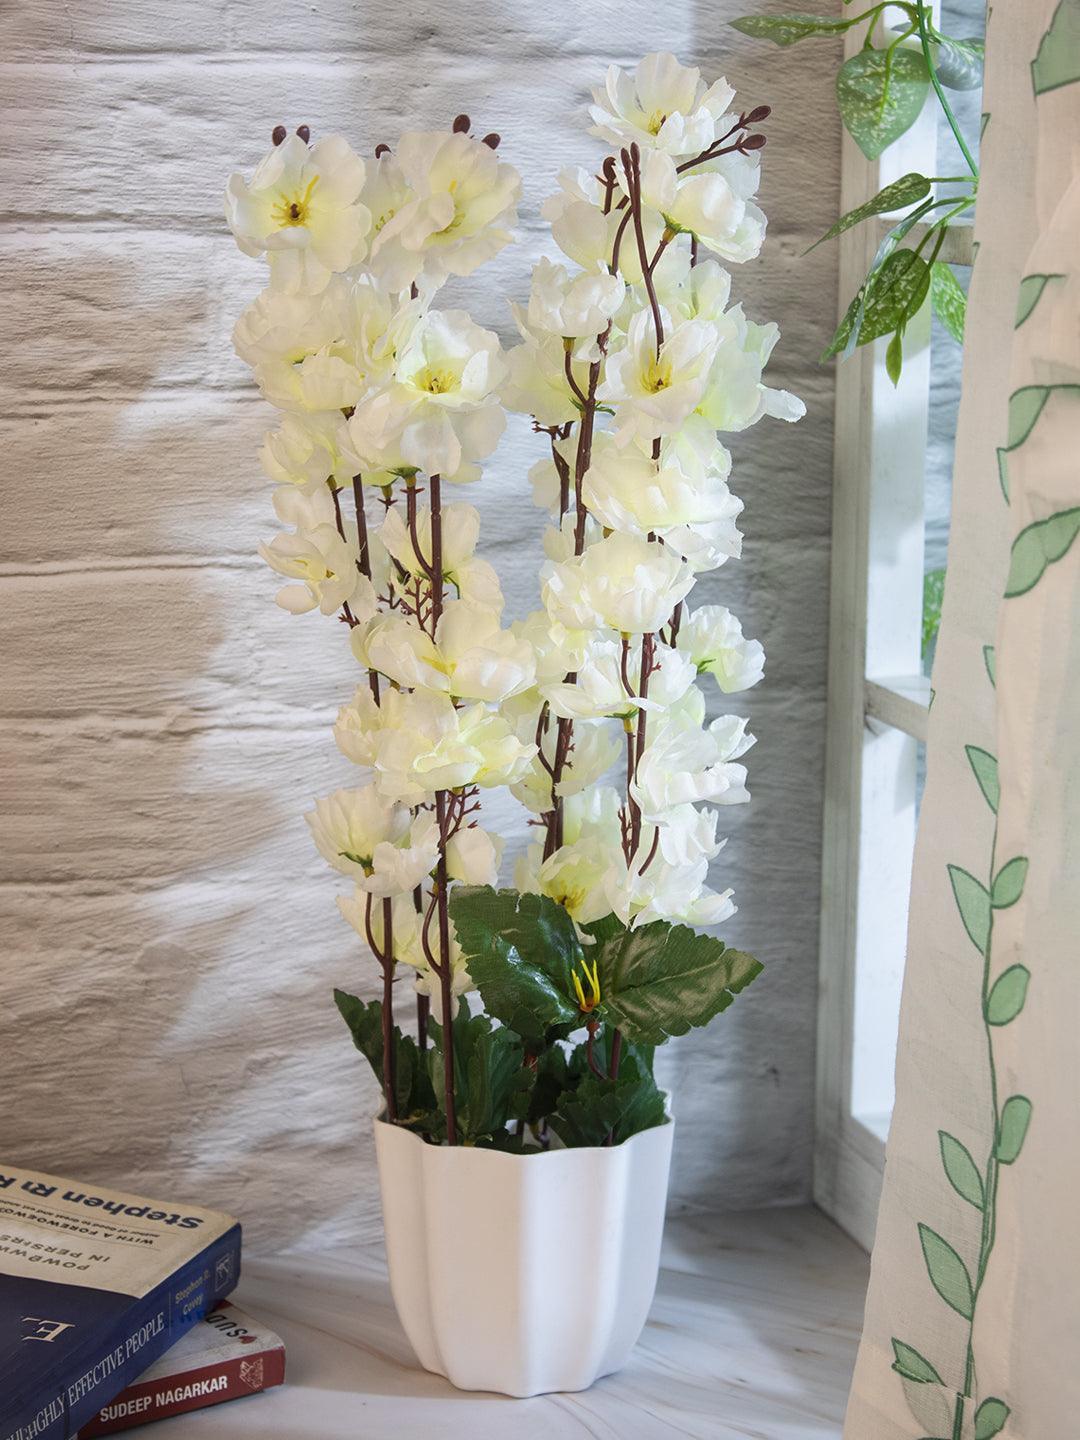 Artificial Flower Plant with White Pot, Blossoms, White, Plastic Plant - MARKET 99